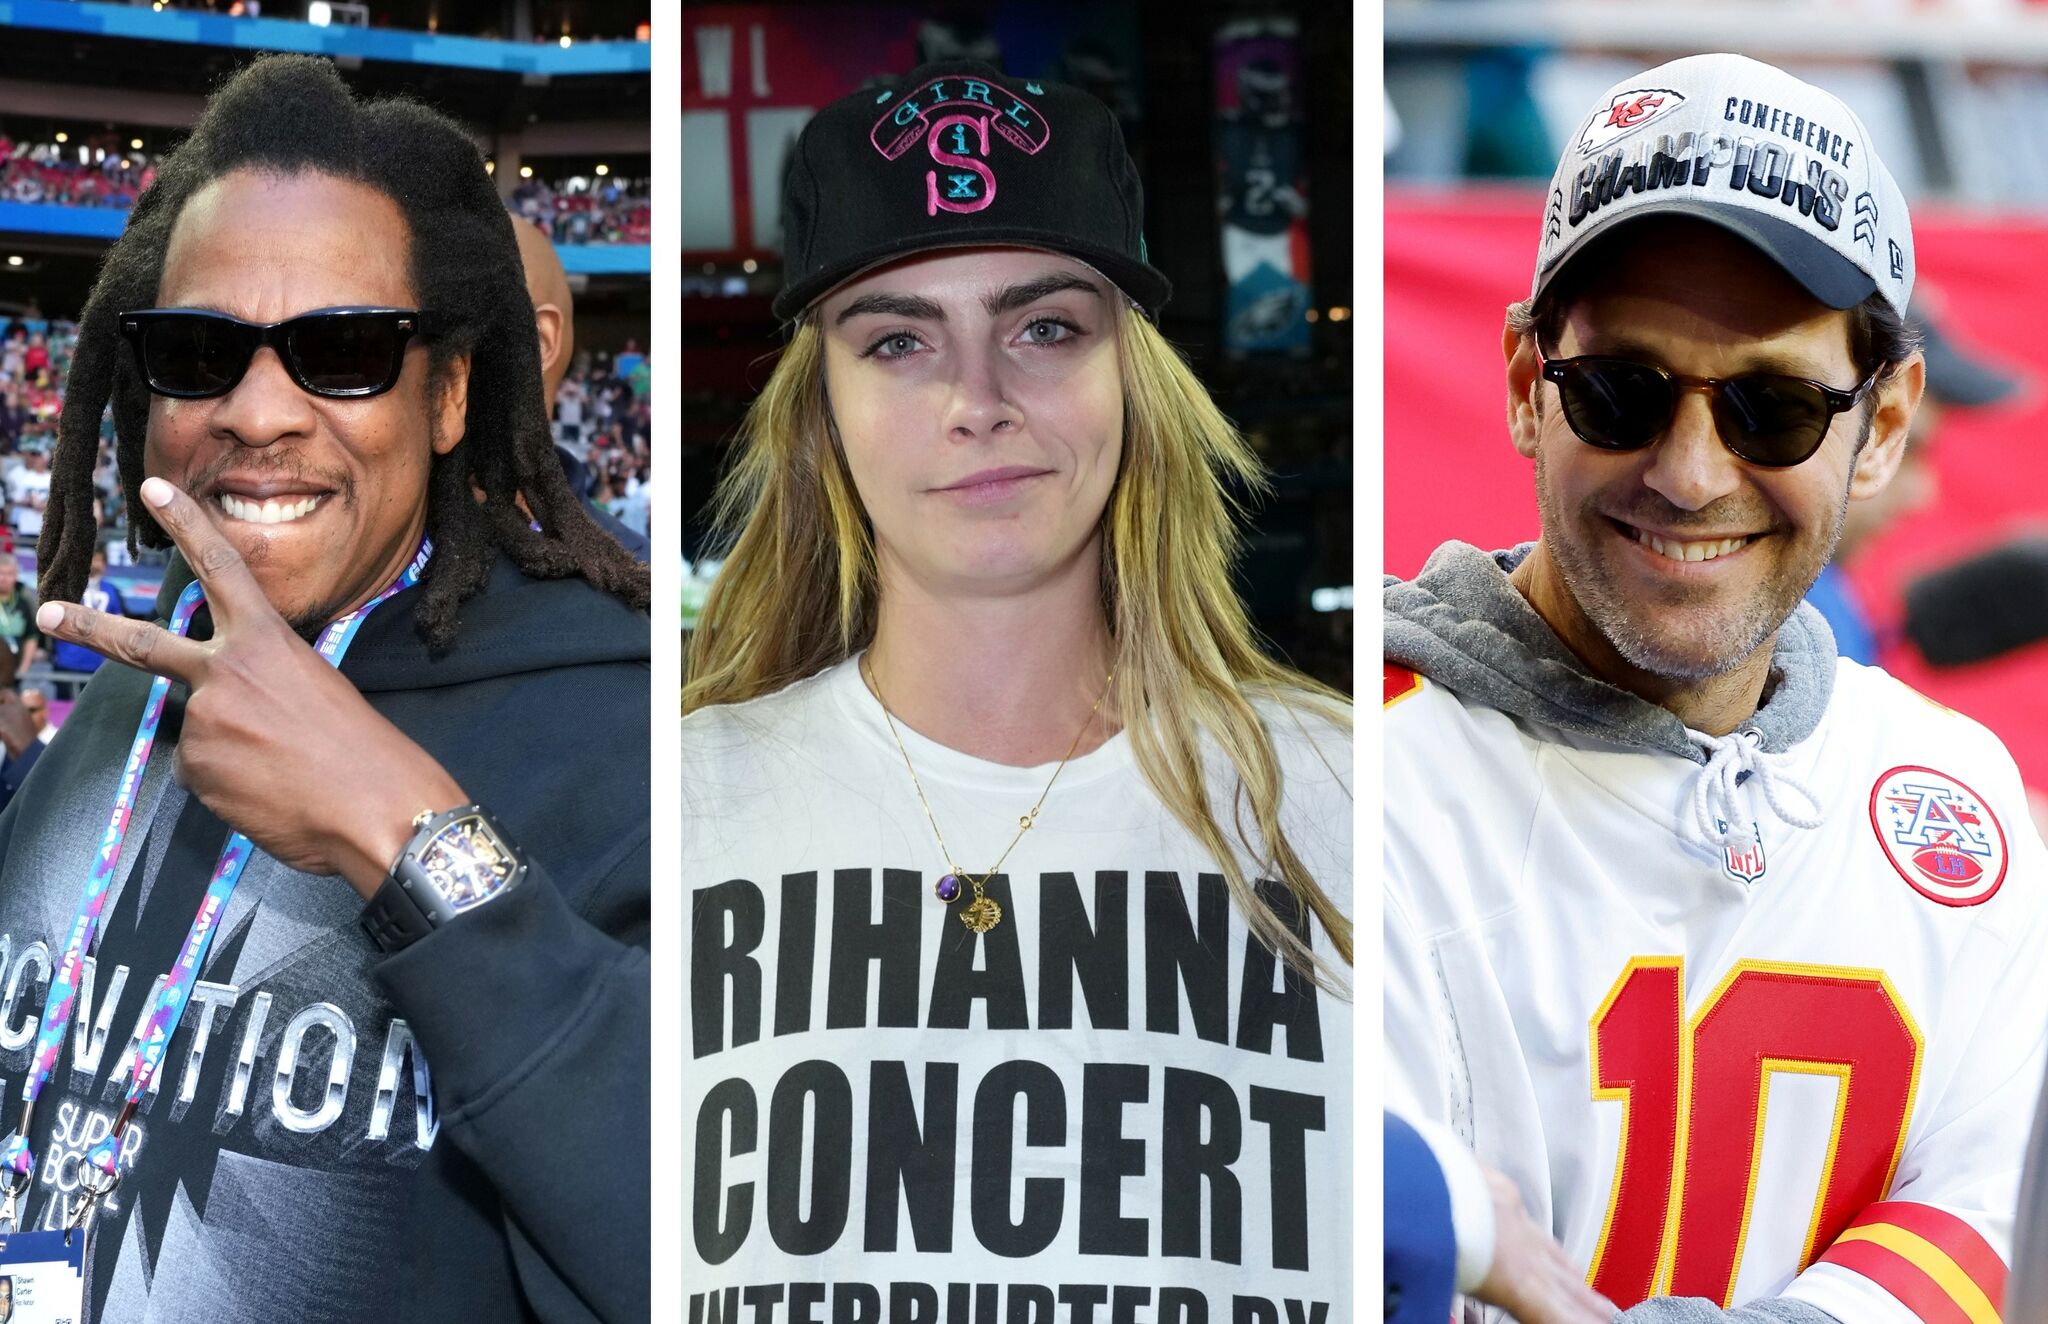 Super Bowl 2023: Cara Delevingne Wears Rihanna Concert T-Shirt